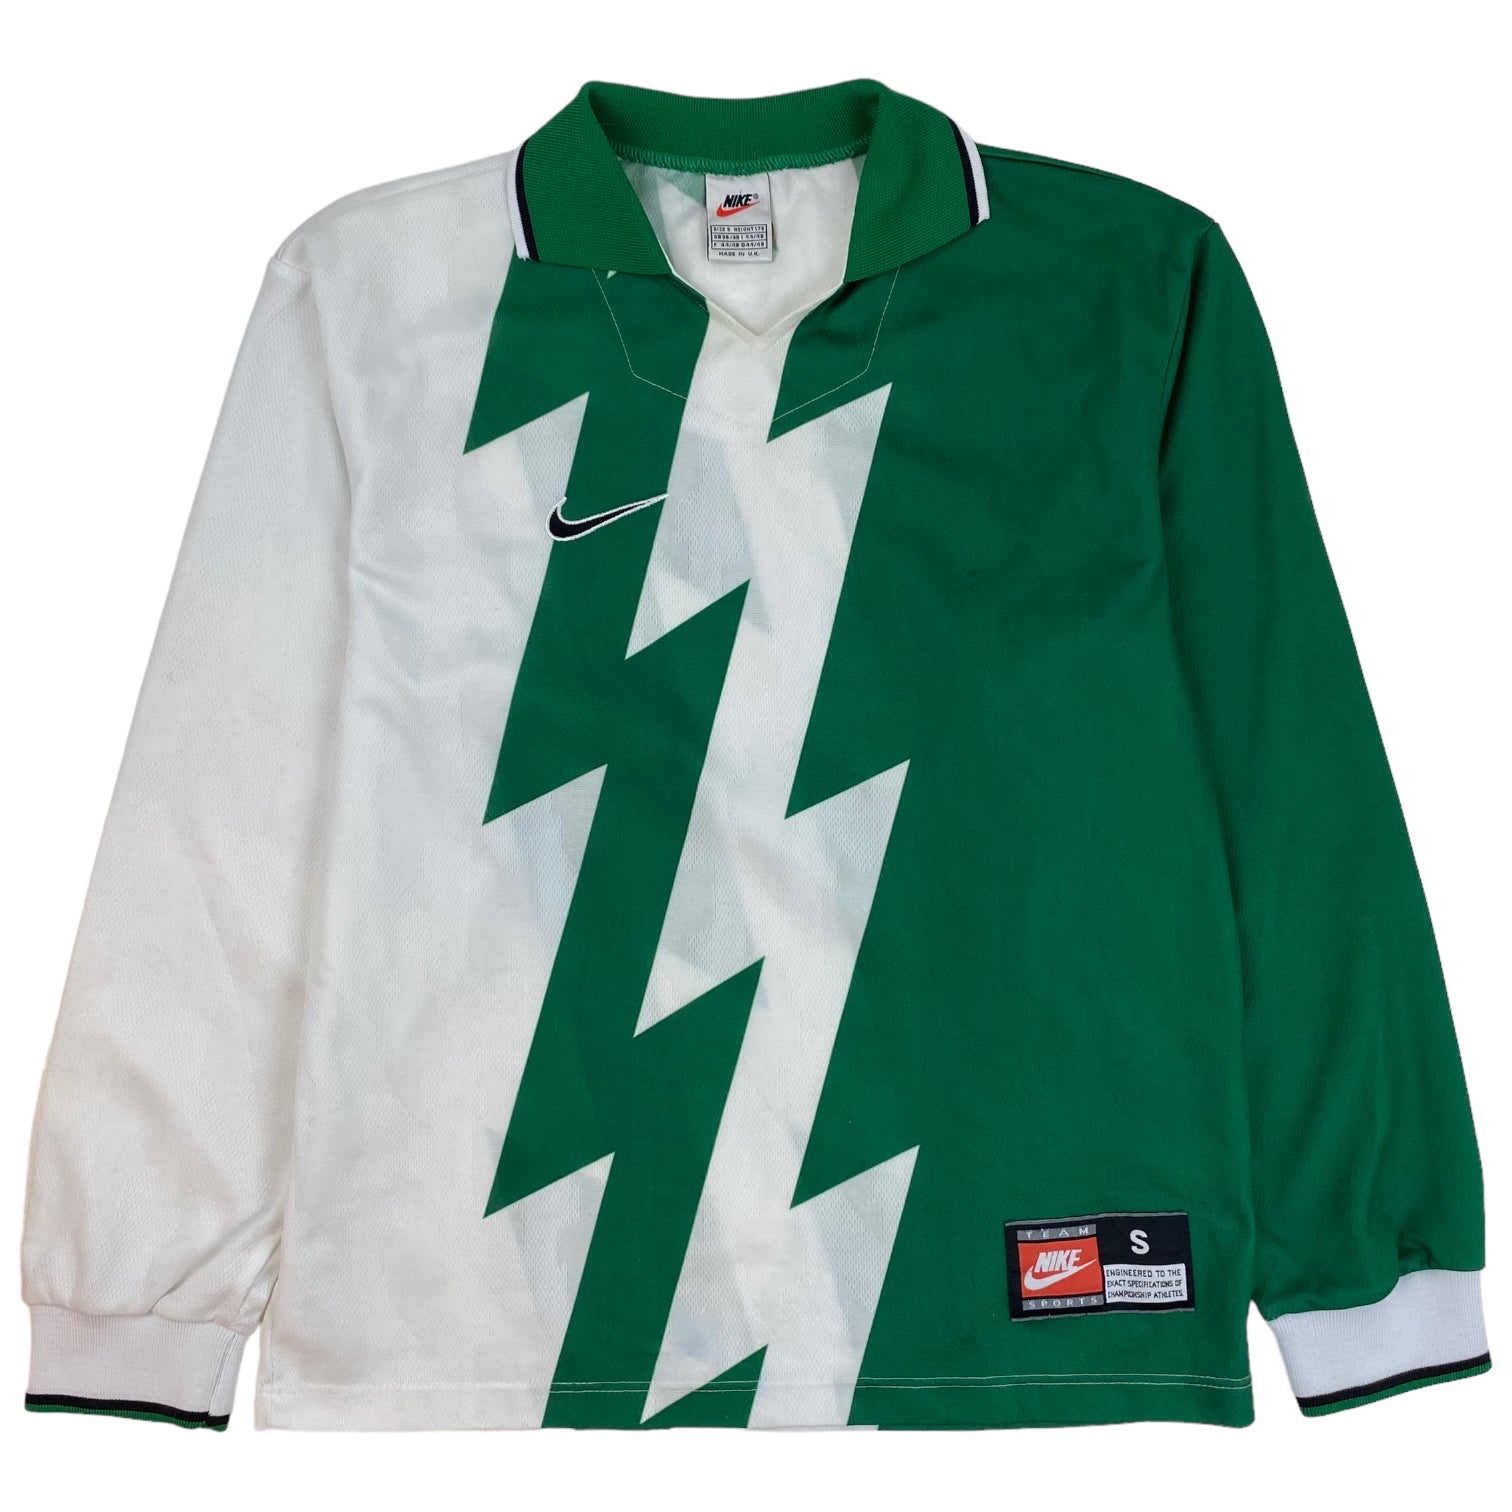 Vintage Nike Template Jersey Green